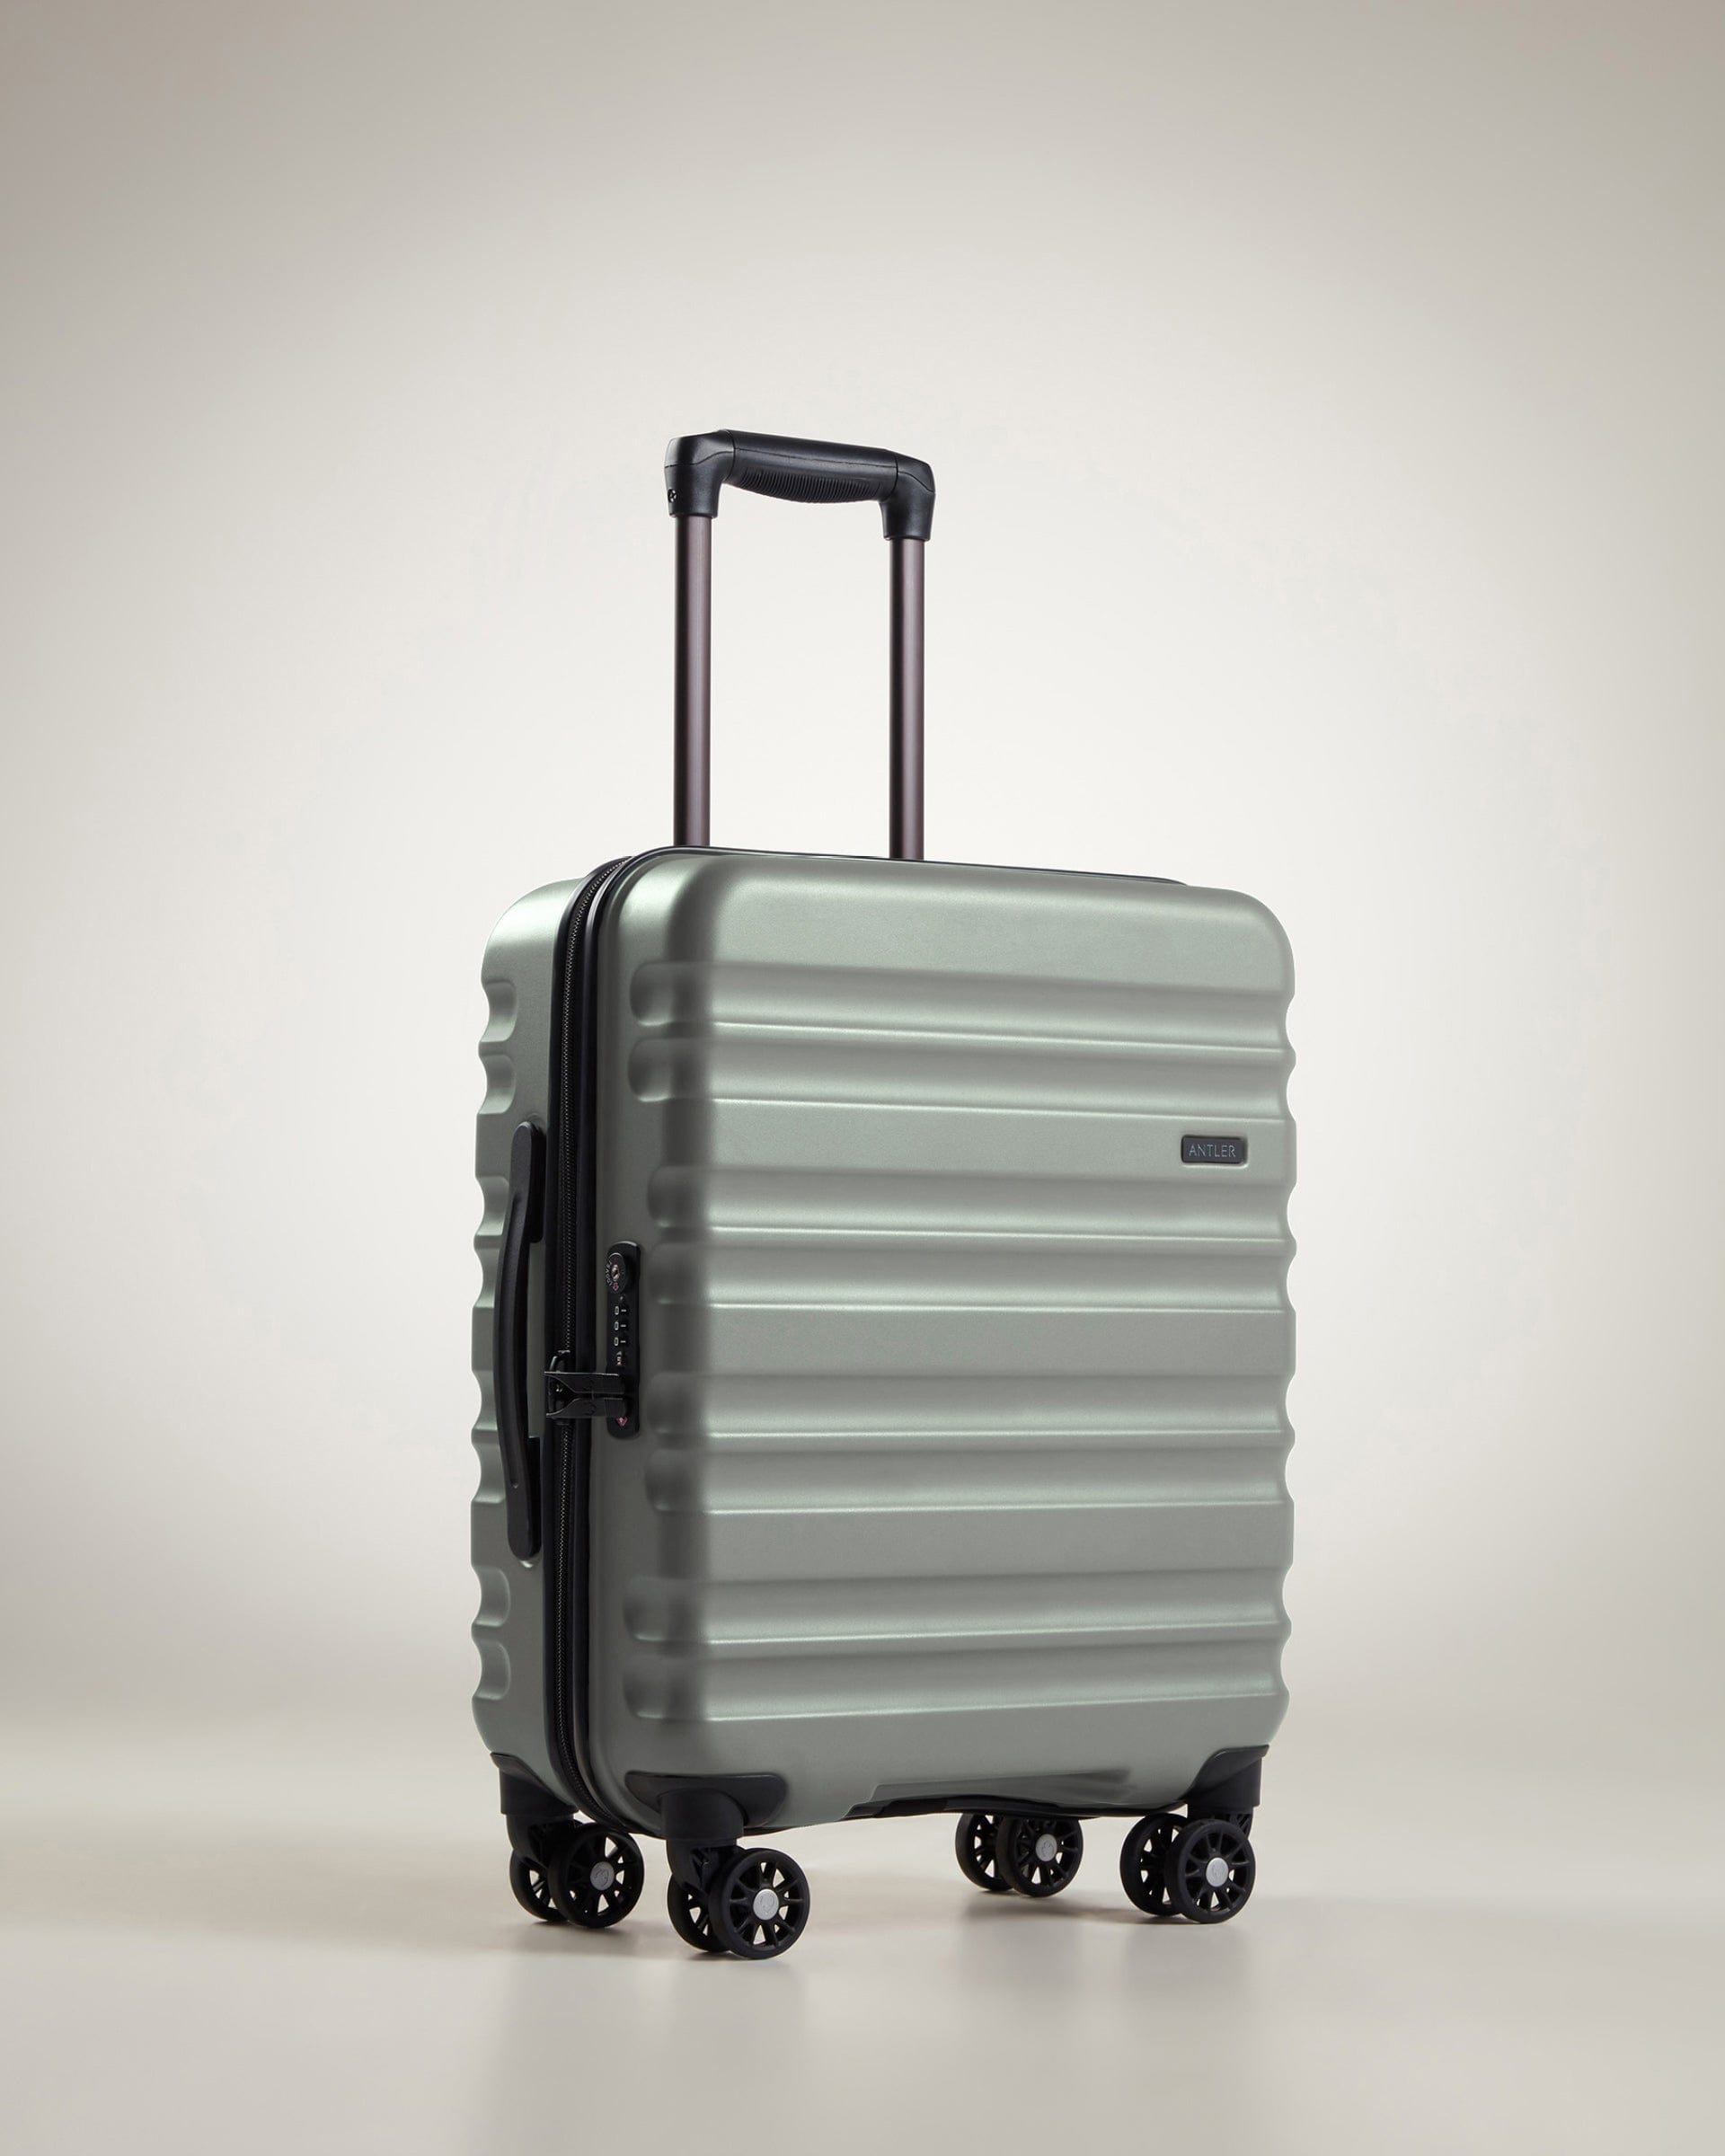 View Antler Clifton Cabin Suitcase In Sage Size 55cm x 40cm x 20cm information